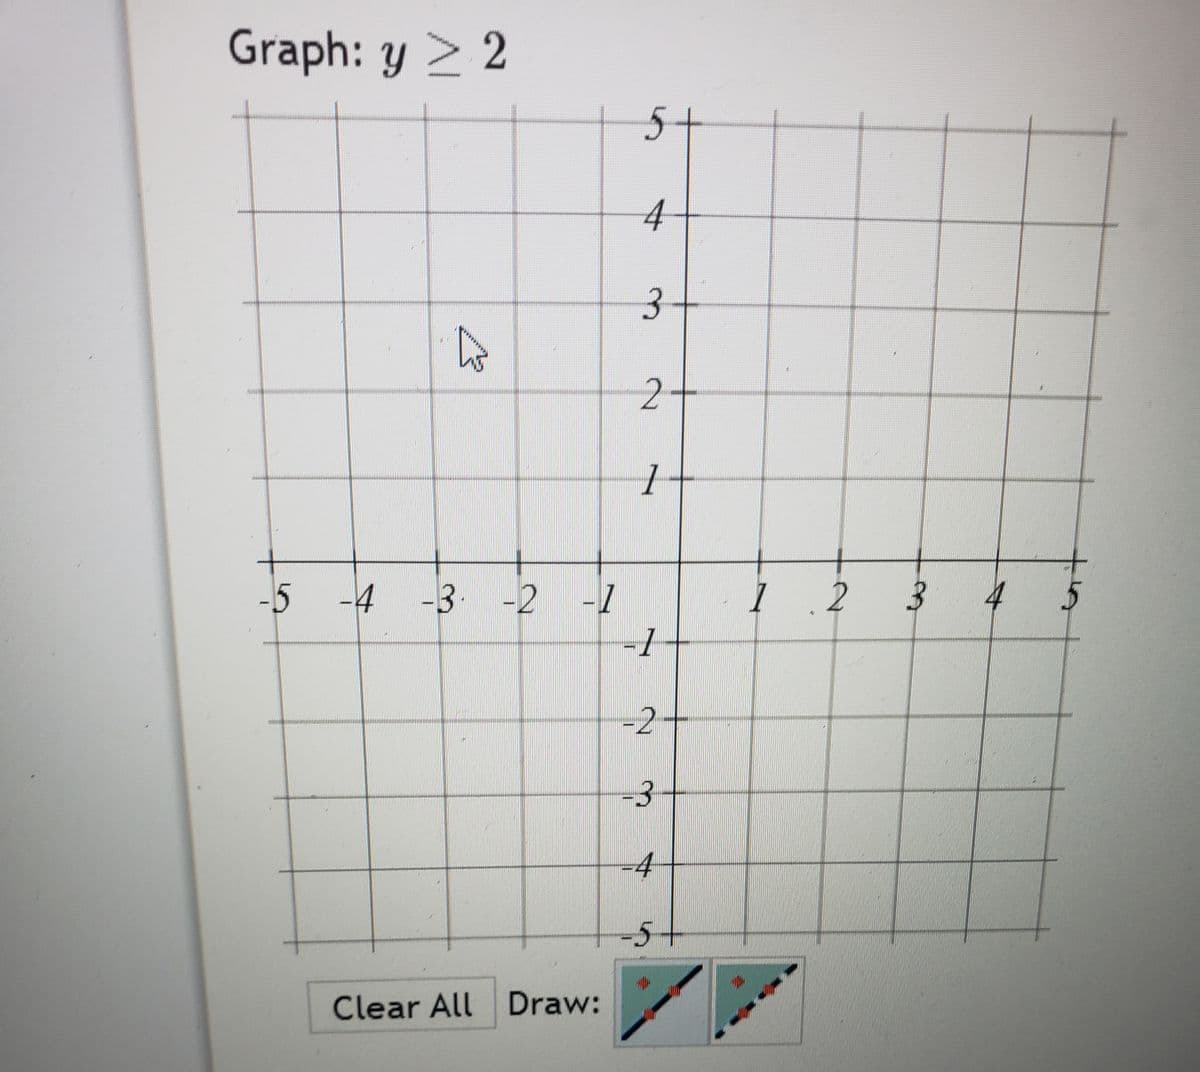 Graph: y > 2
5-
2
-5
-4 -3 -2 -1
1
-2-
-3
-4
5+
Clear All Draw:
